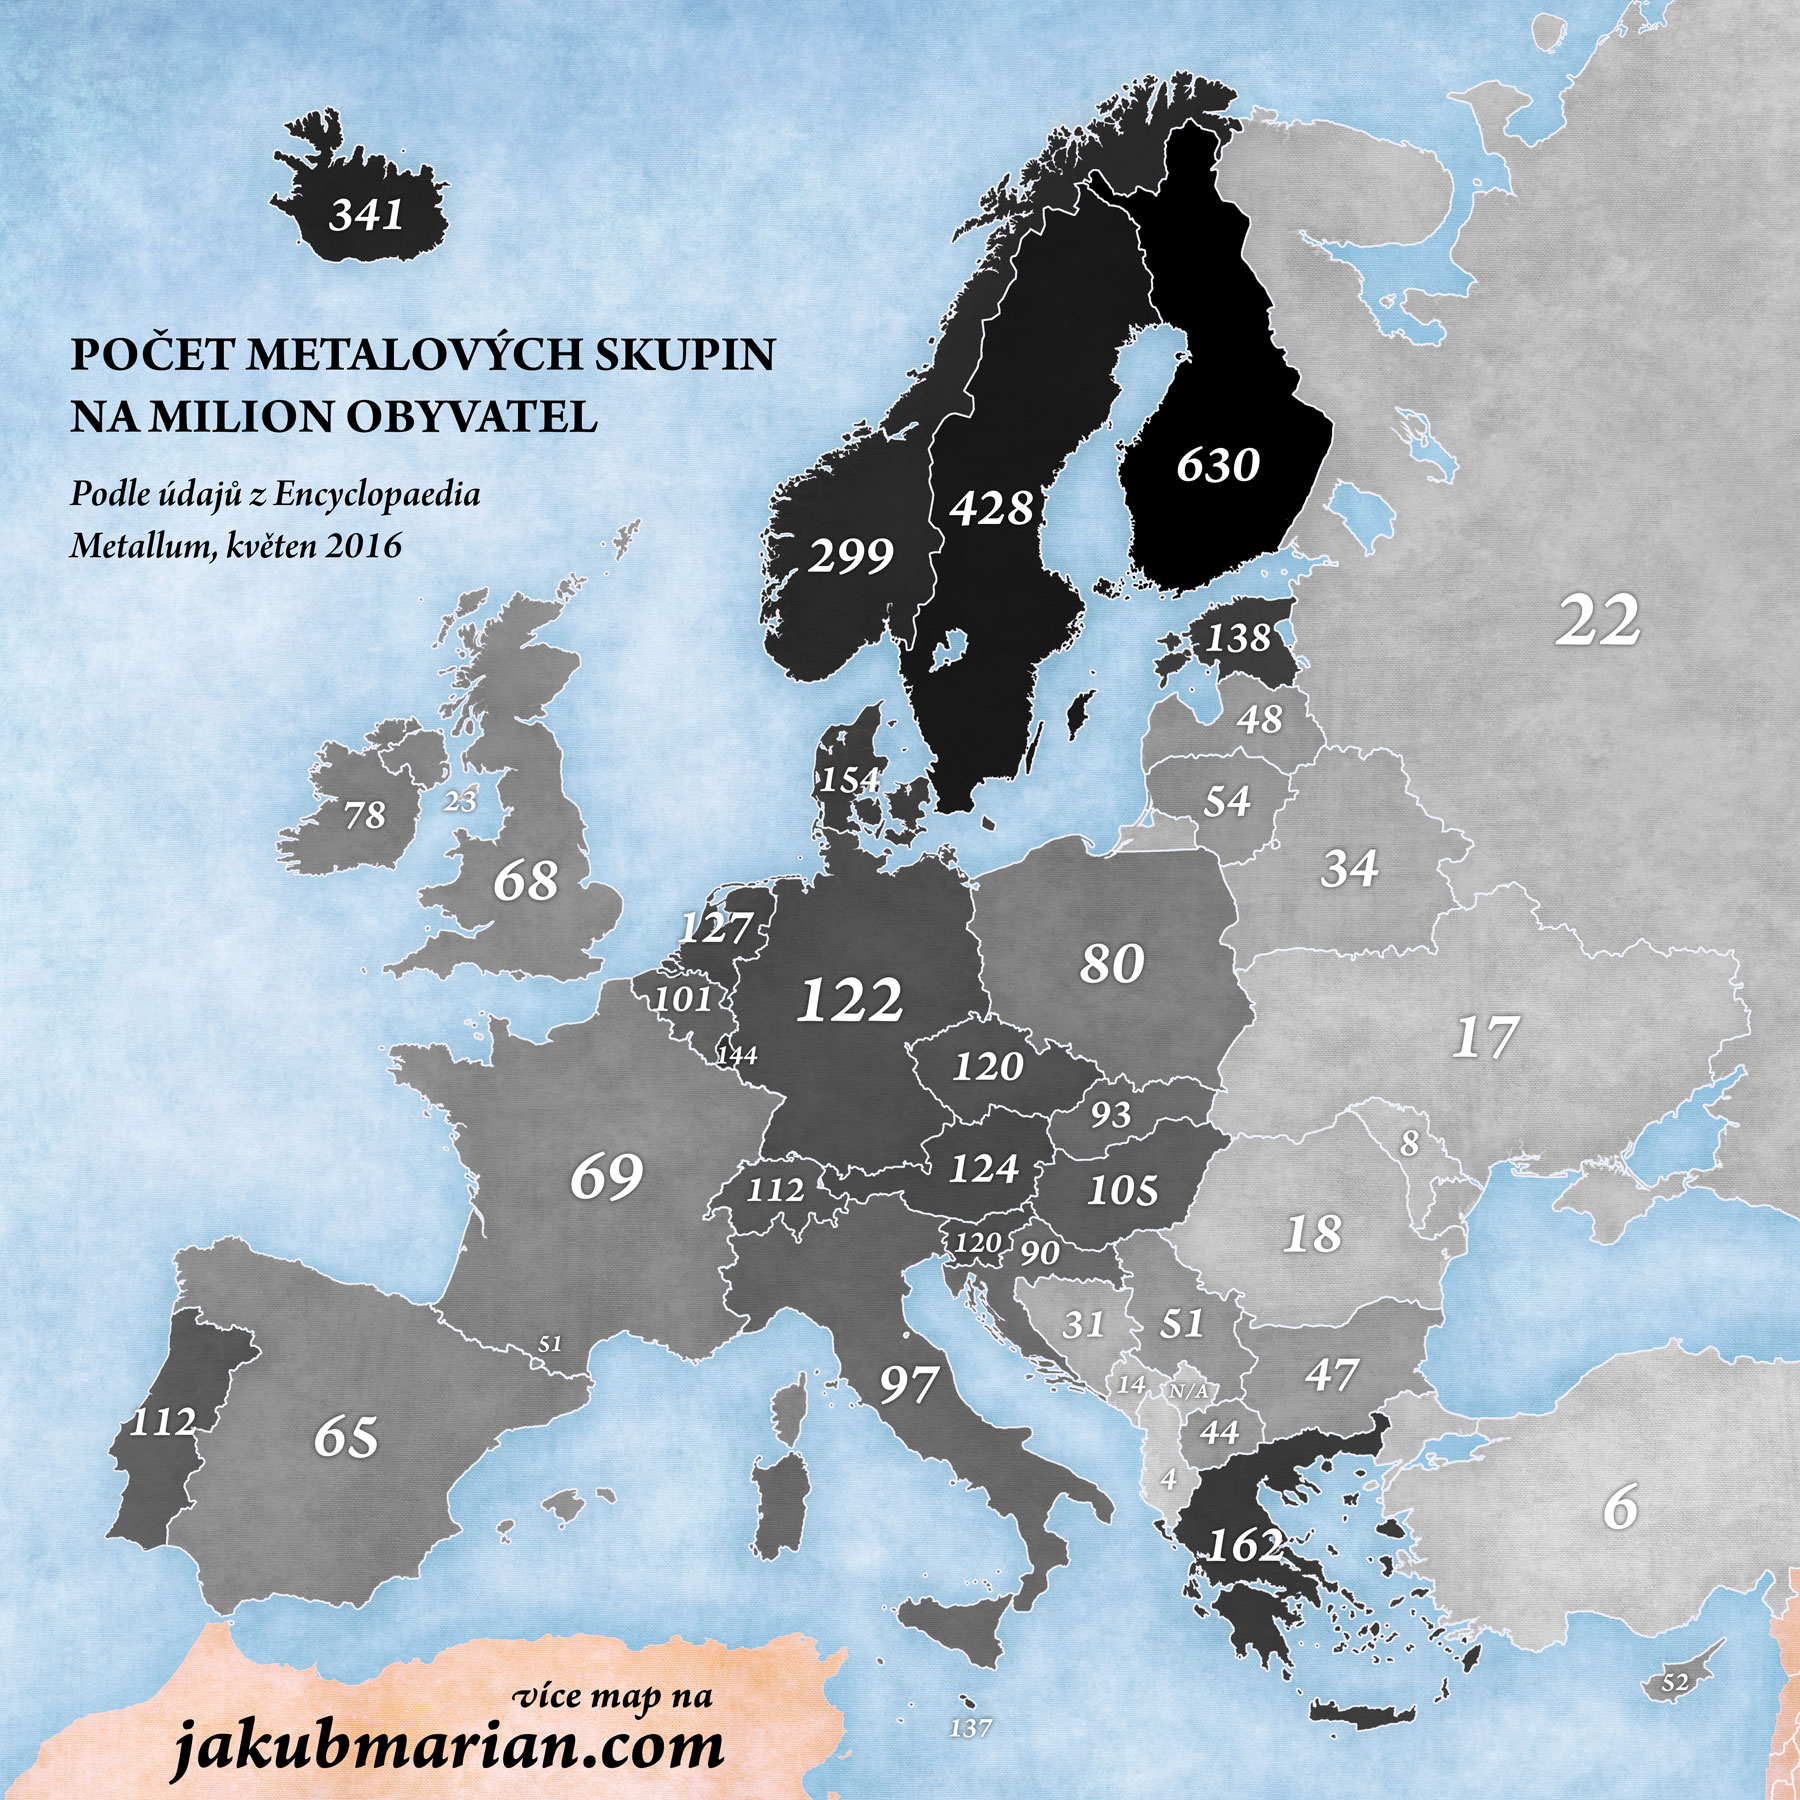 Počet metalových skupin na milion obyvatel v Evropě